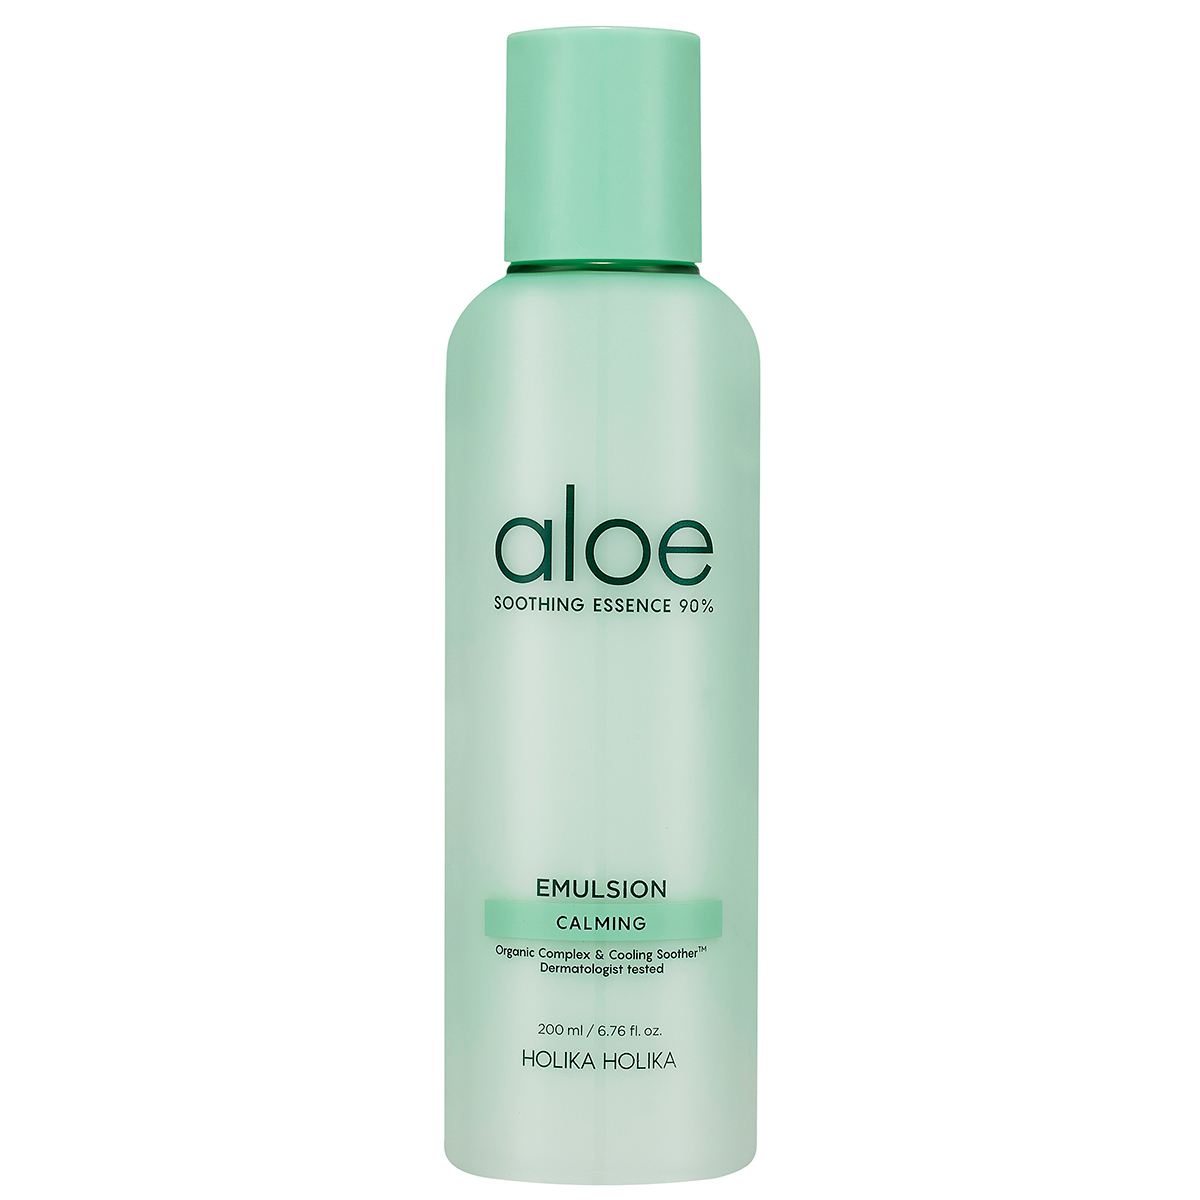 Aloe Soothing Essence 90% Emulsion, 200 ml Holika Holika K-Beauty Hudpleie - K-Beauty